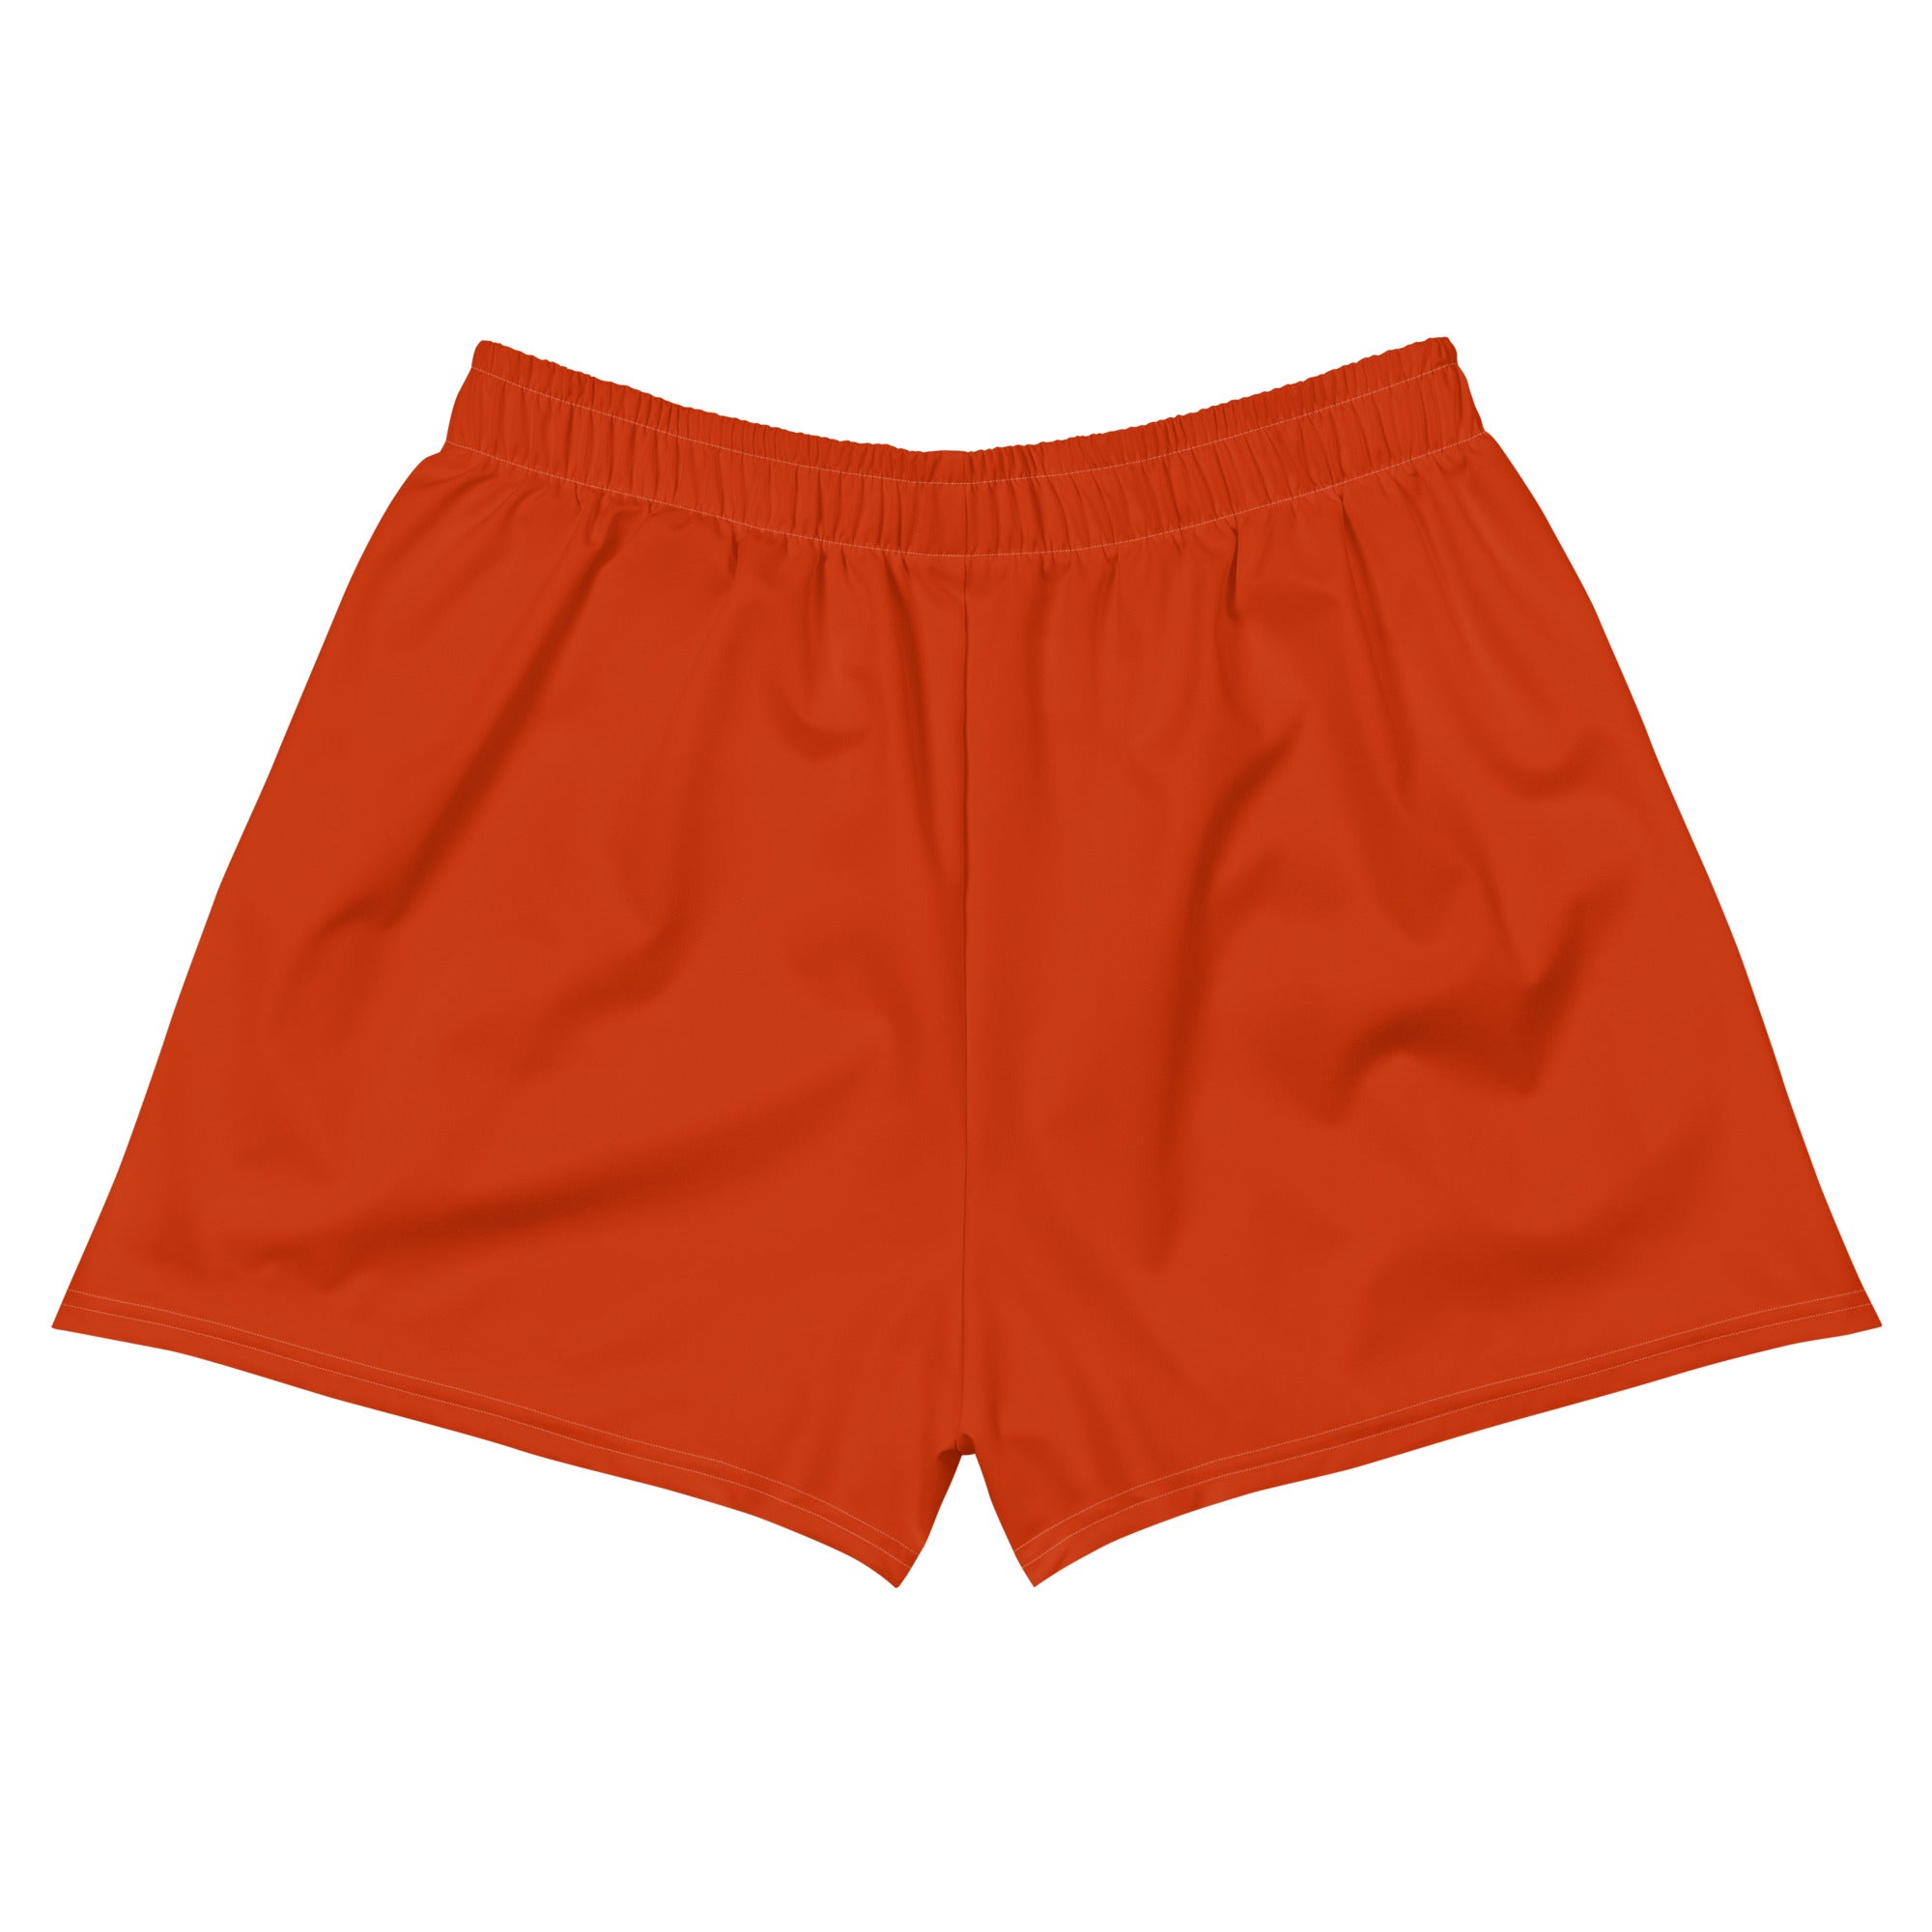 LBN Women's Athletic Short Shorts